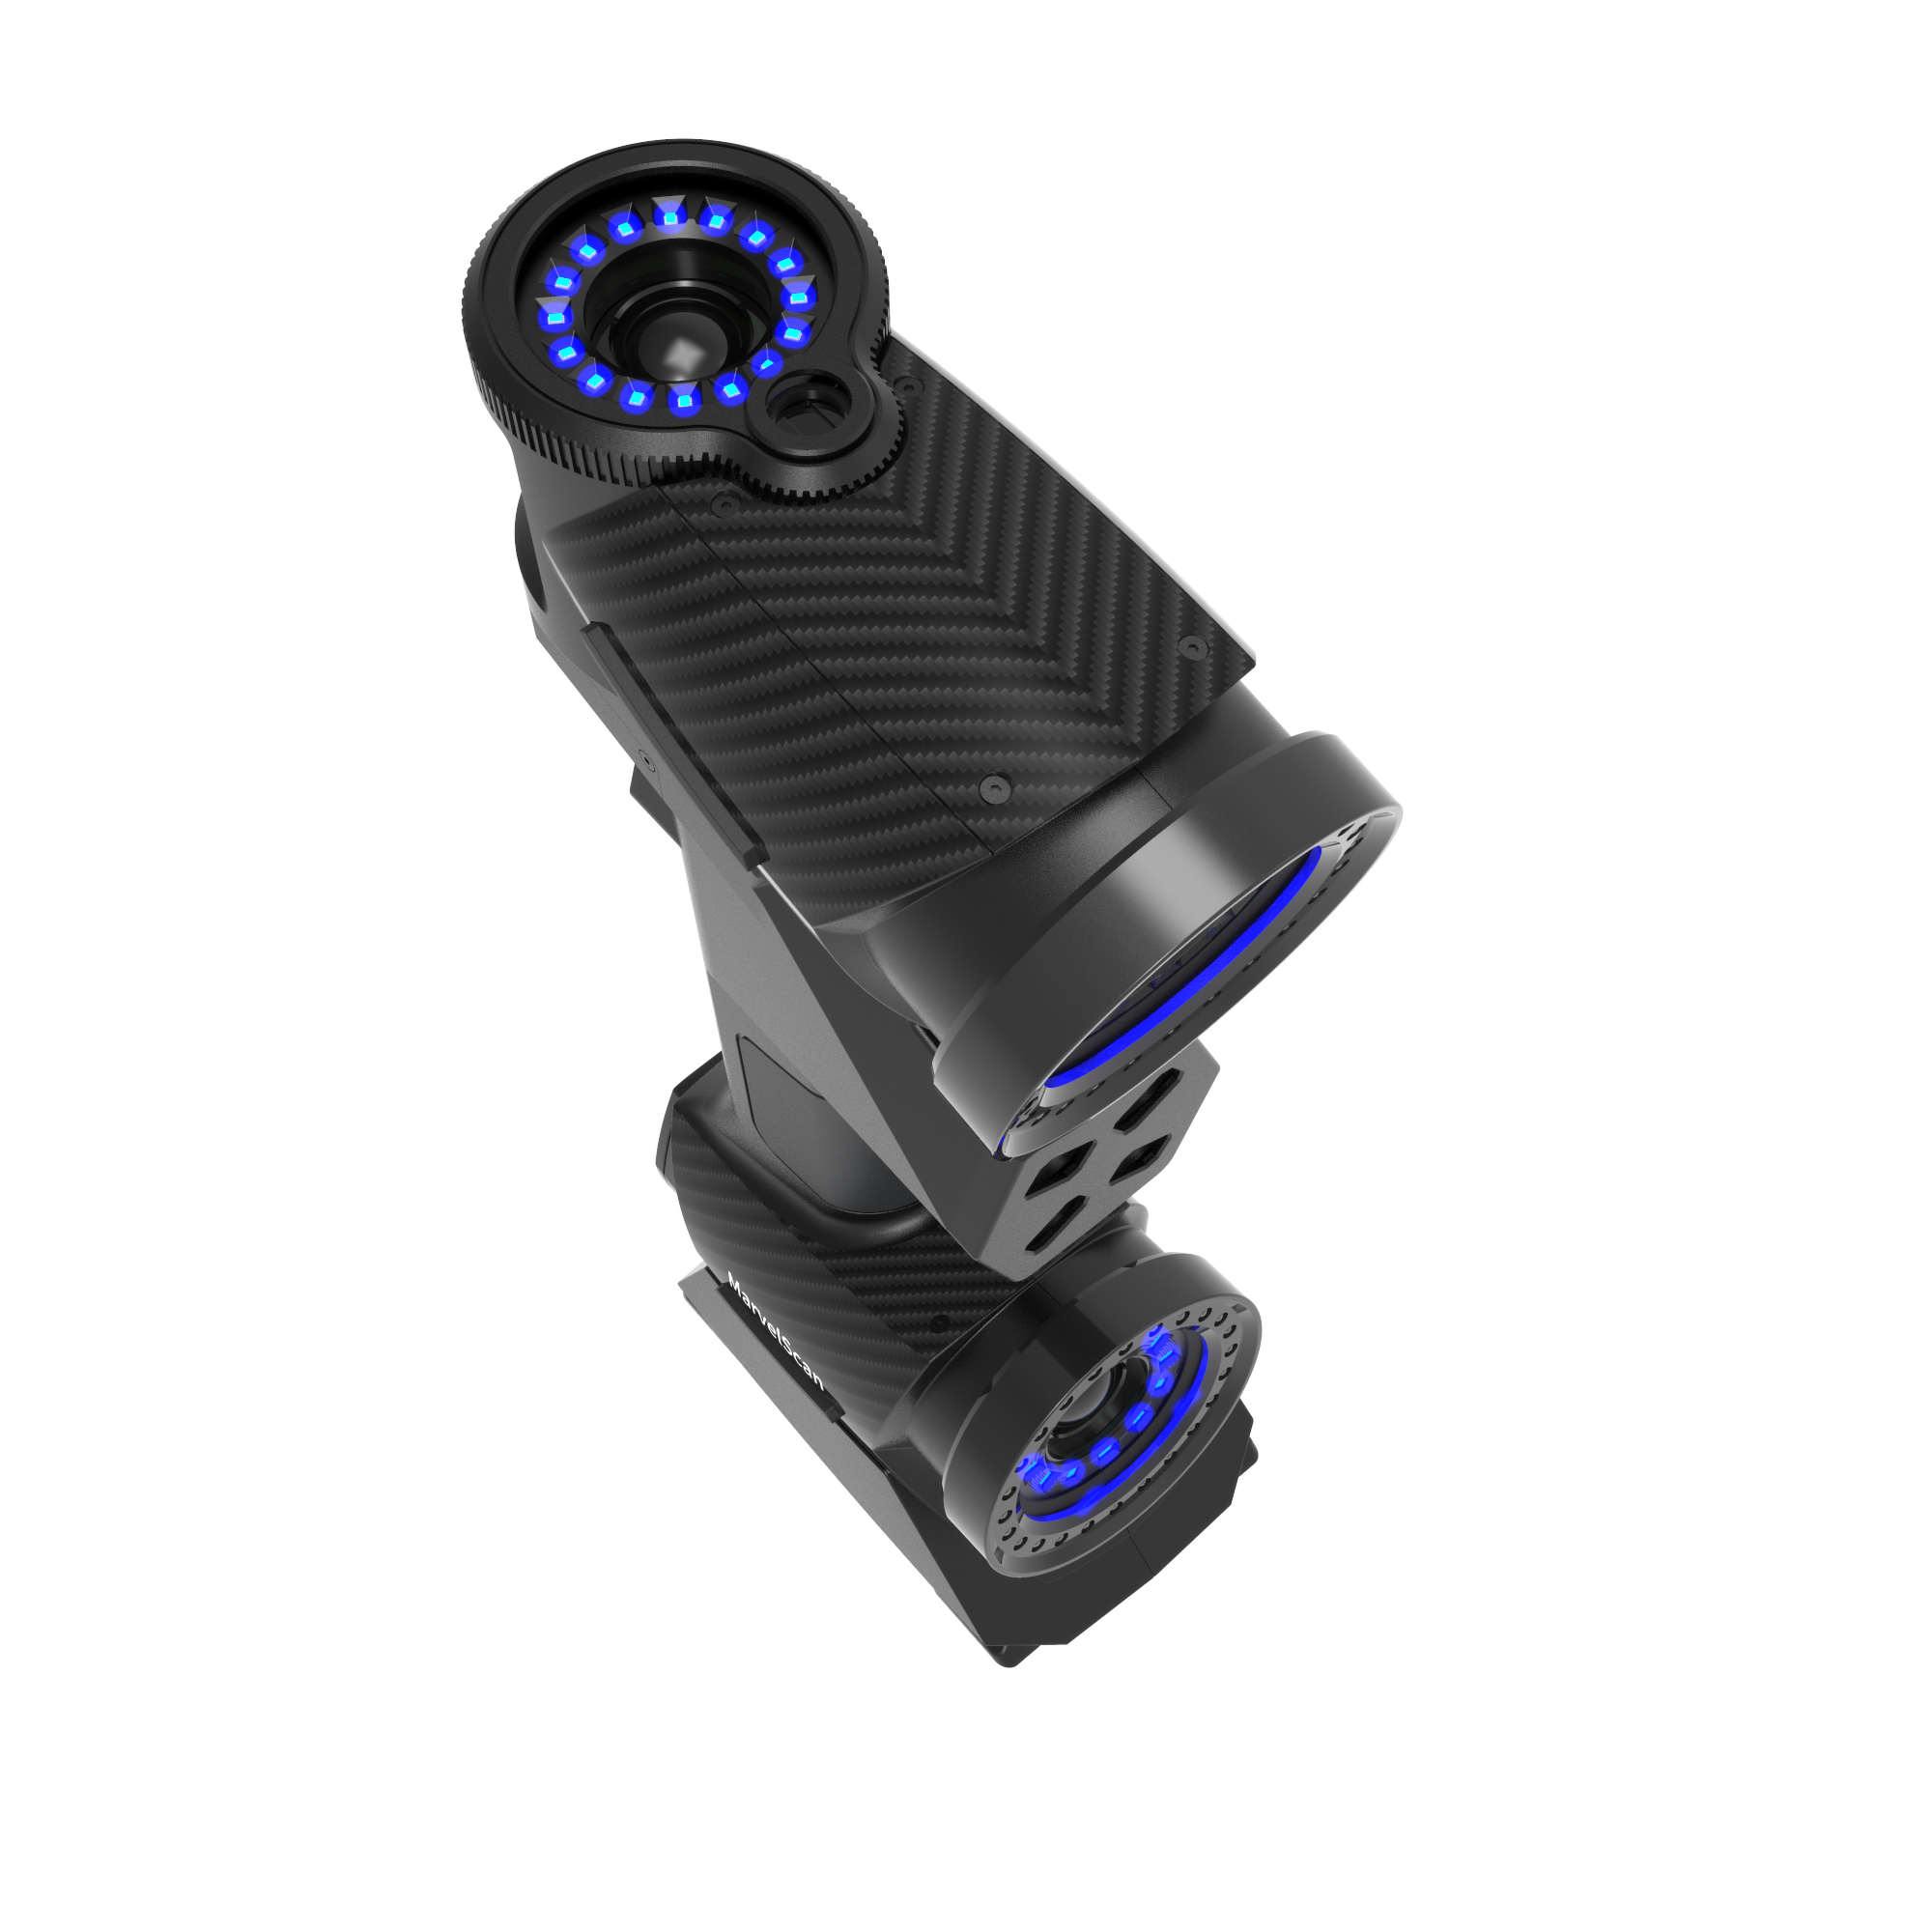 Scanner 3D a luce blu senza marcatori MarvelScan Tracker per misurazioni senza contatto